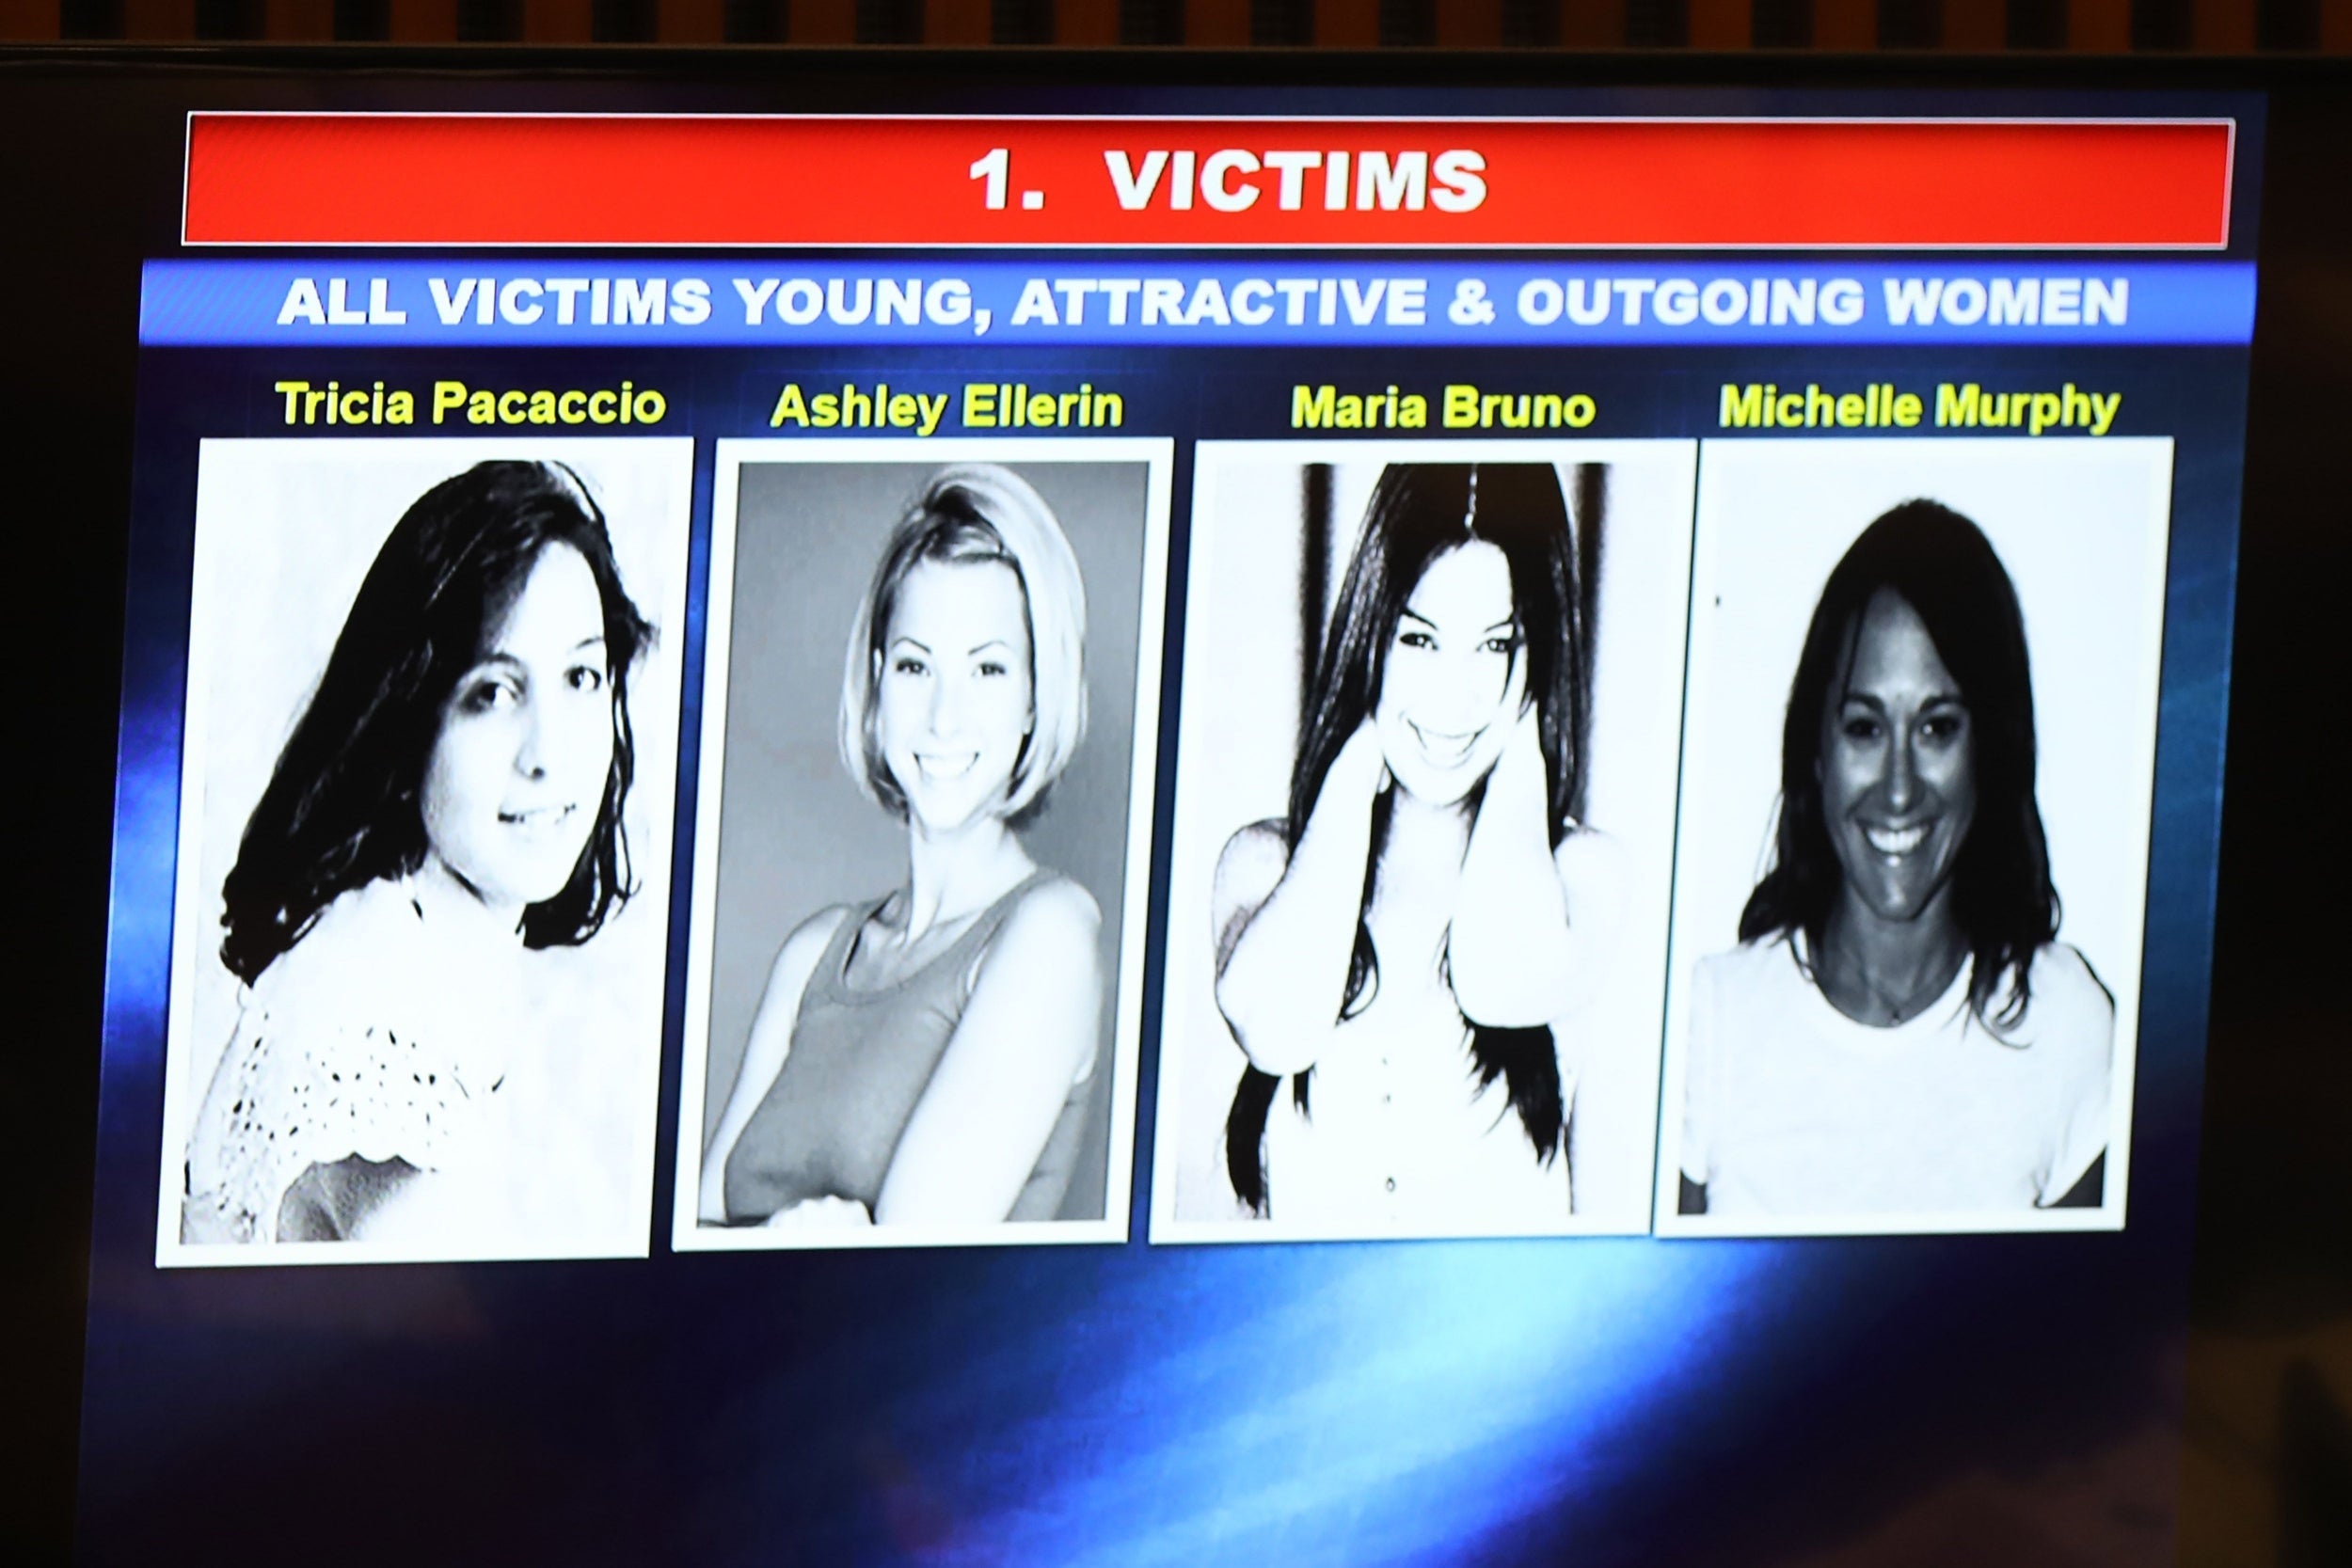 A prosecution slide shows Michael Gargiulo’s victims